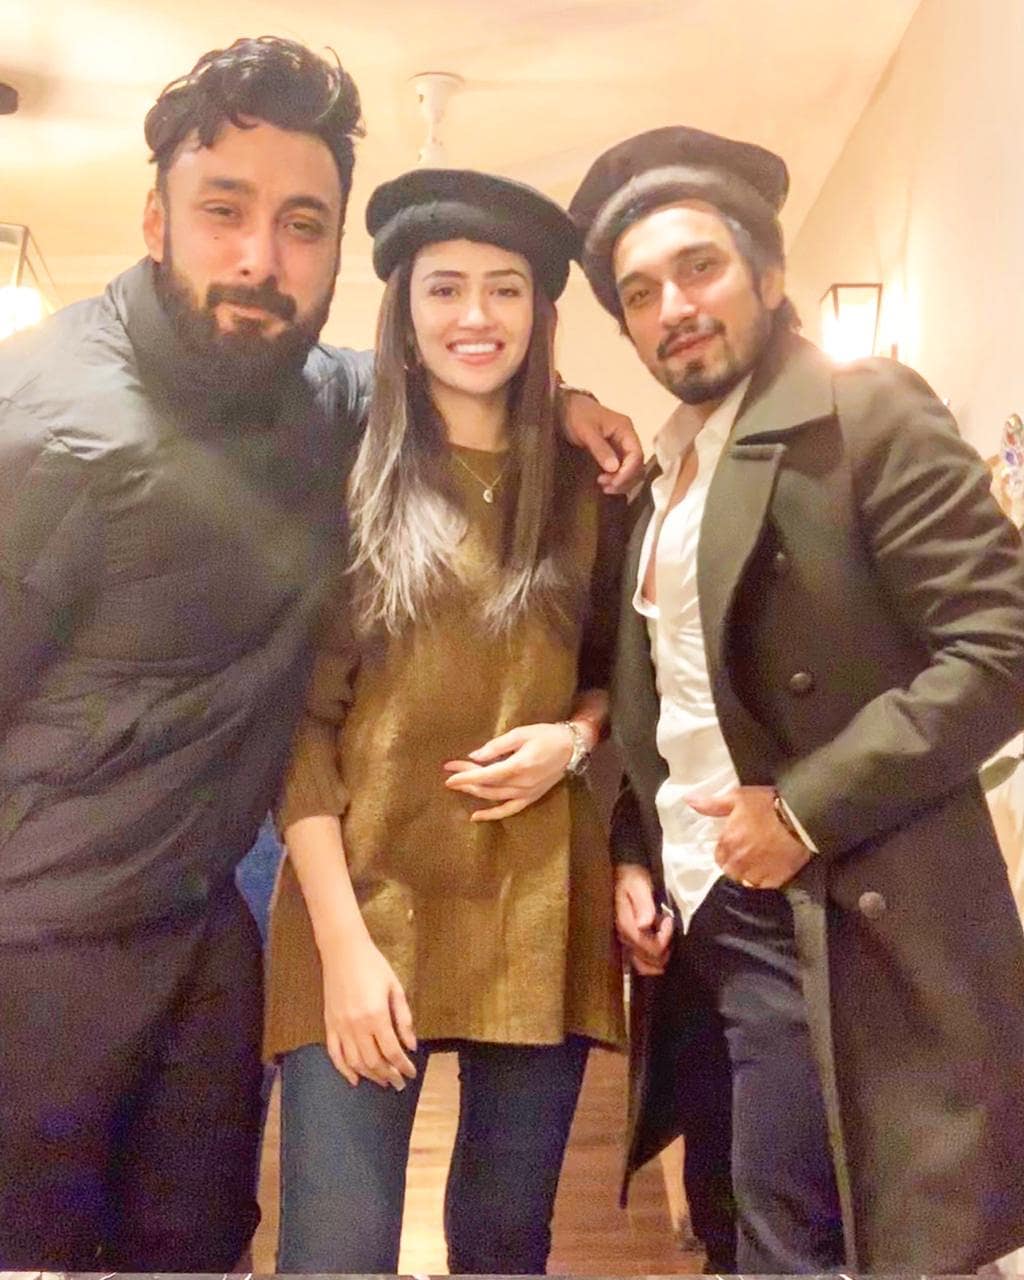 Sana Javed and Umair Jaswal Post 'Baat Pakki' Picture on Instagram!